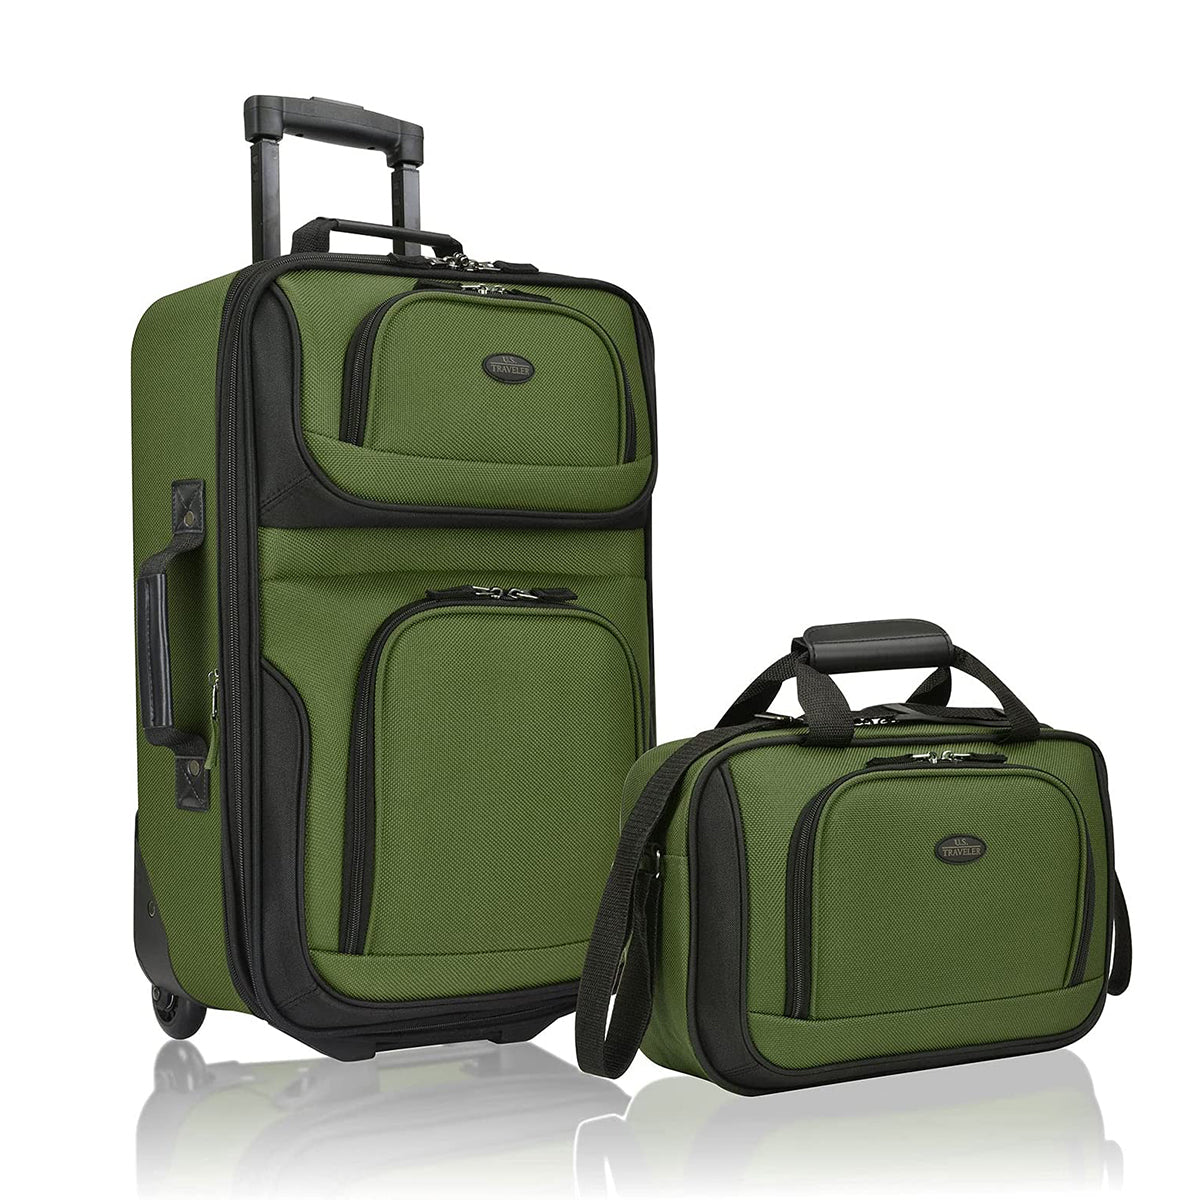 Buy Redhorns Premium Travel Bags: Trolley Bags, Luggage & Suitcases